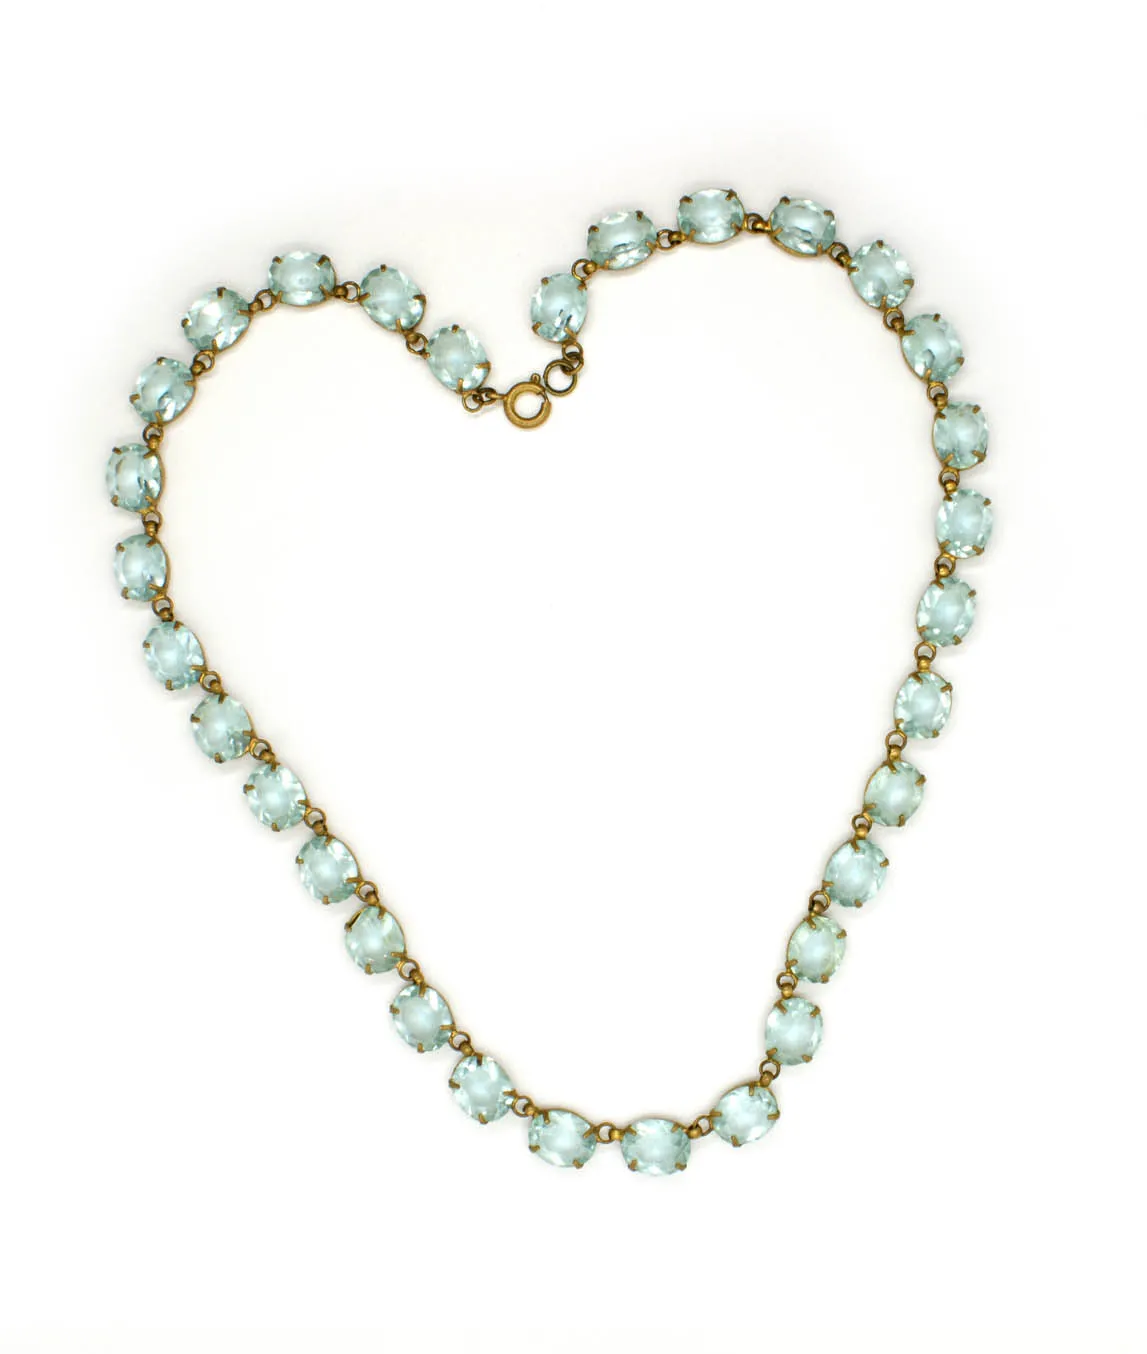 Aquamarine Czech glass necklace